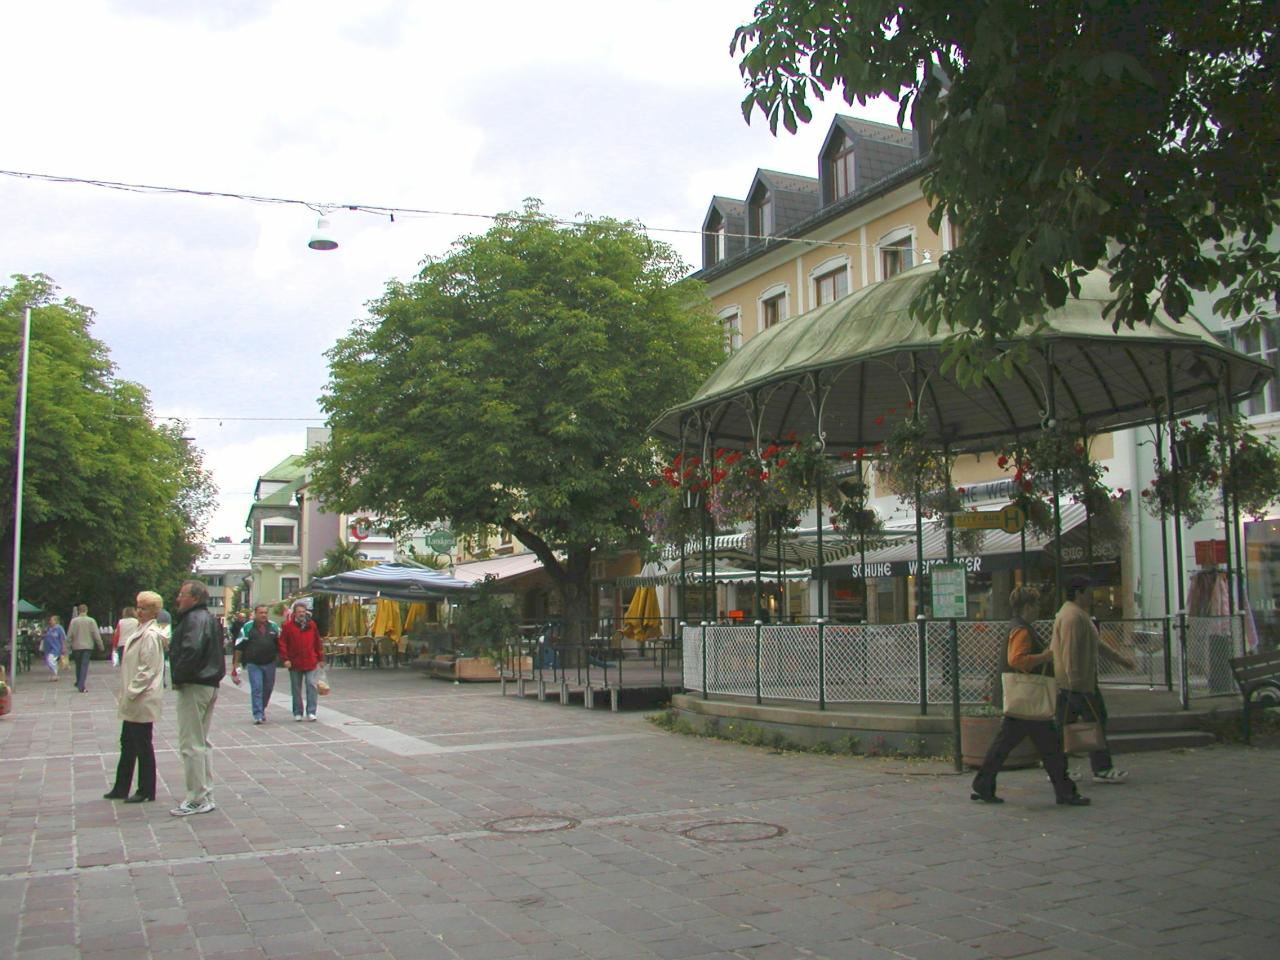 JPEG image - Pedestrian area in Schladming ...